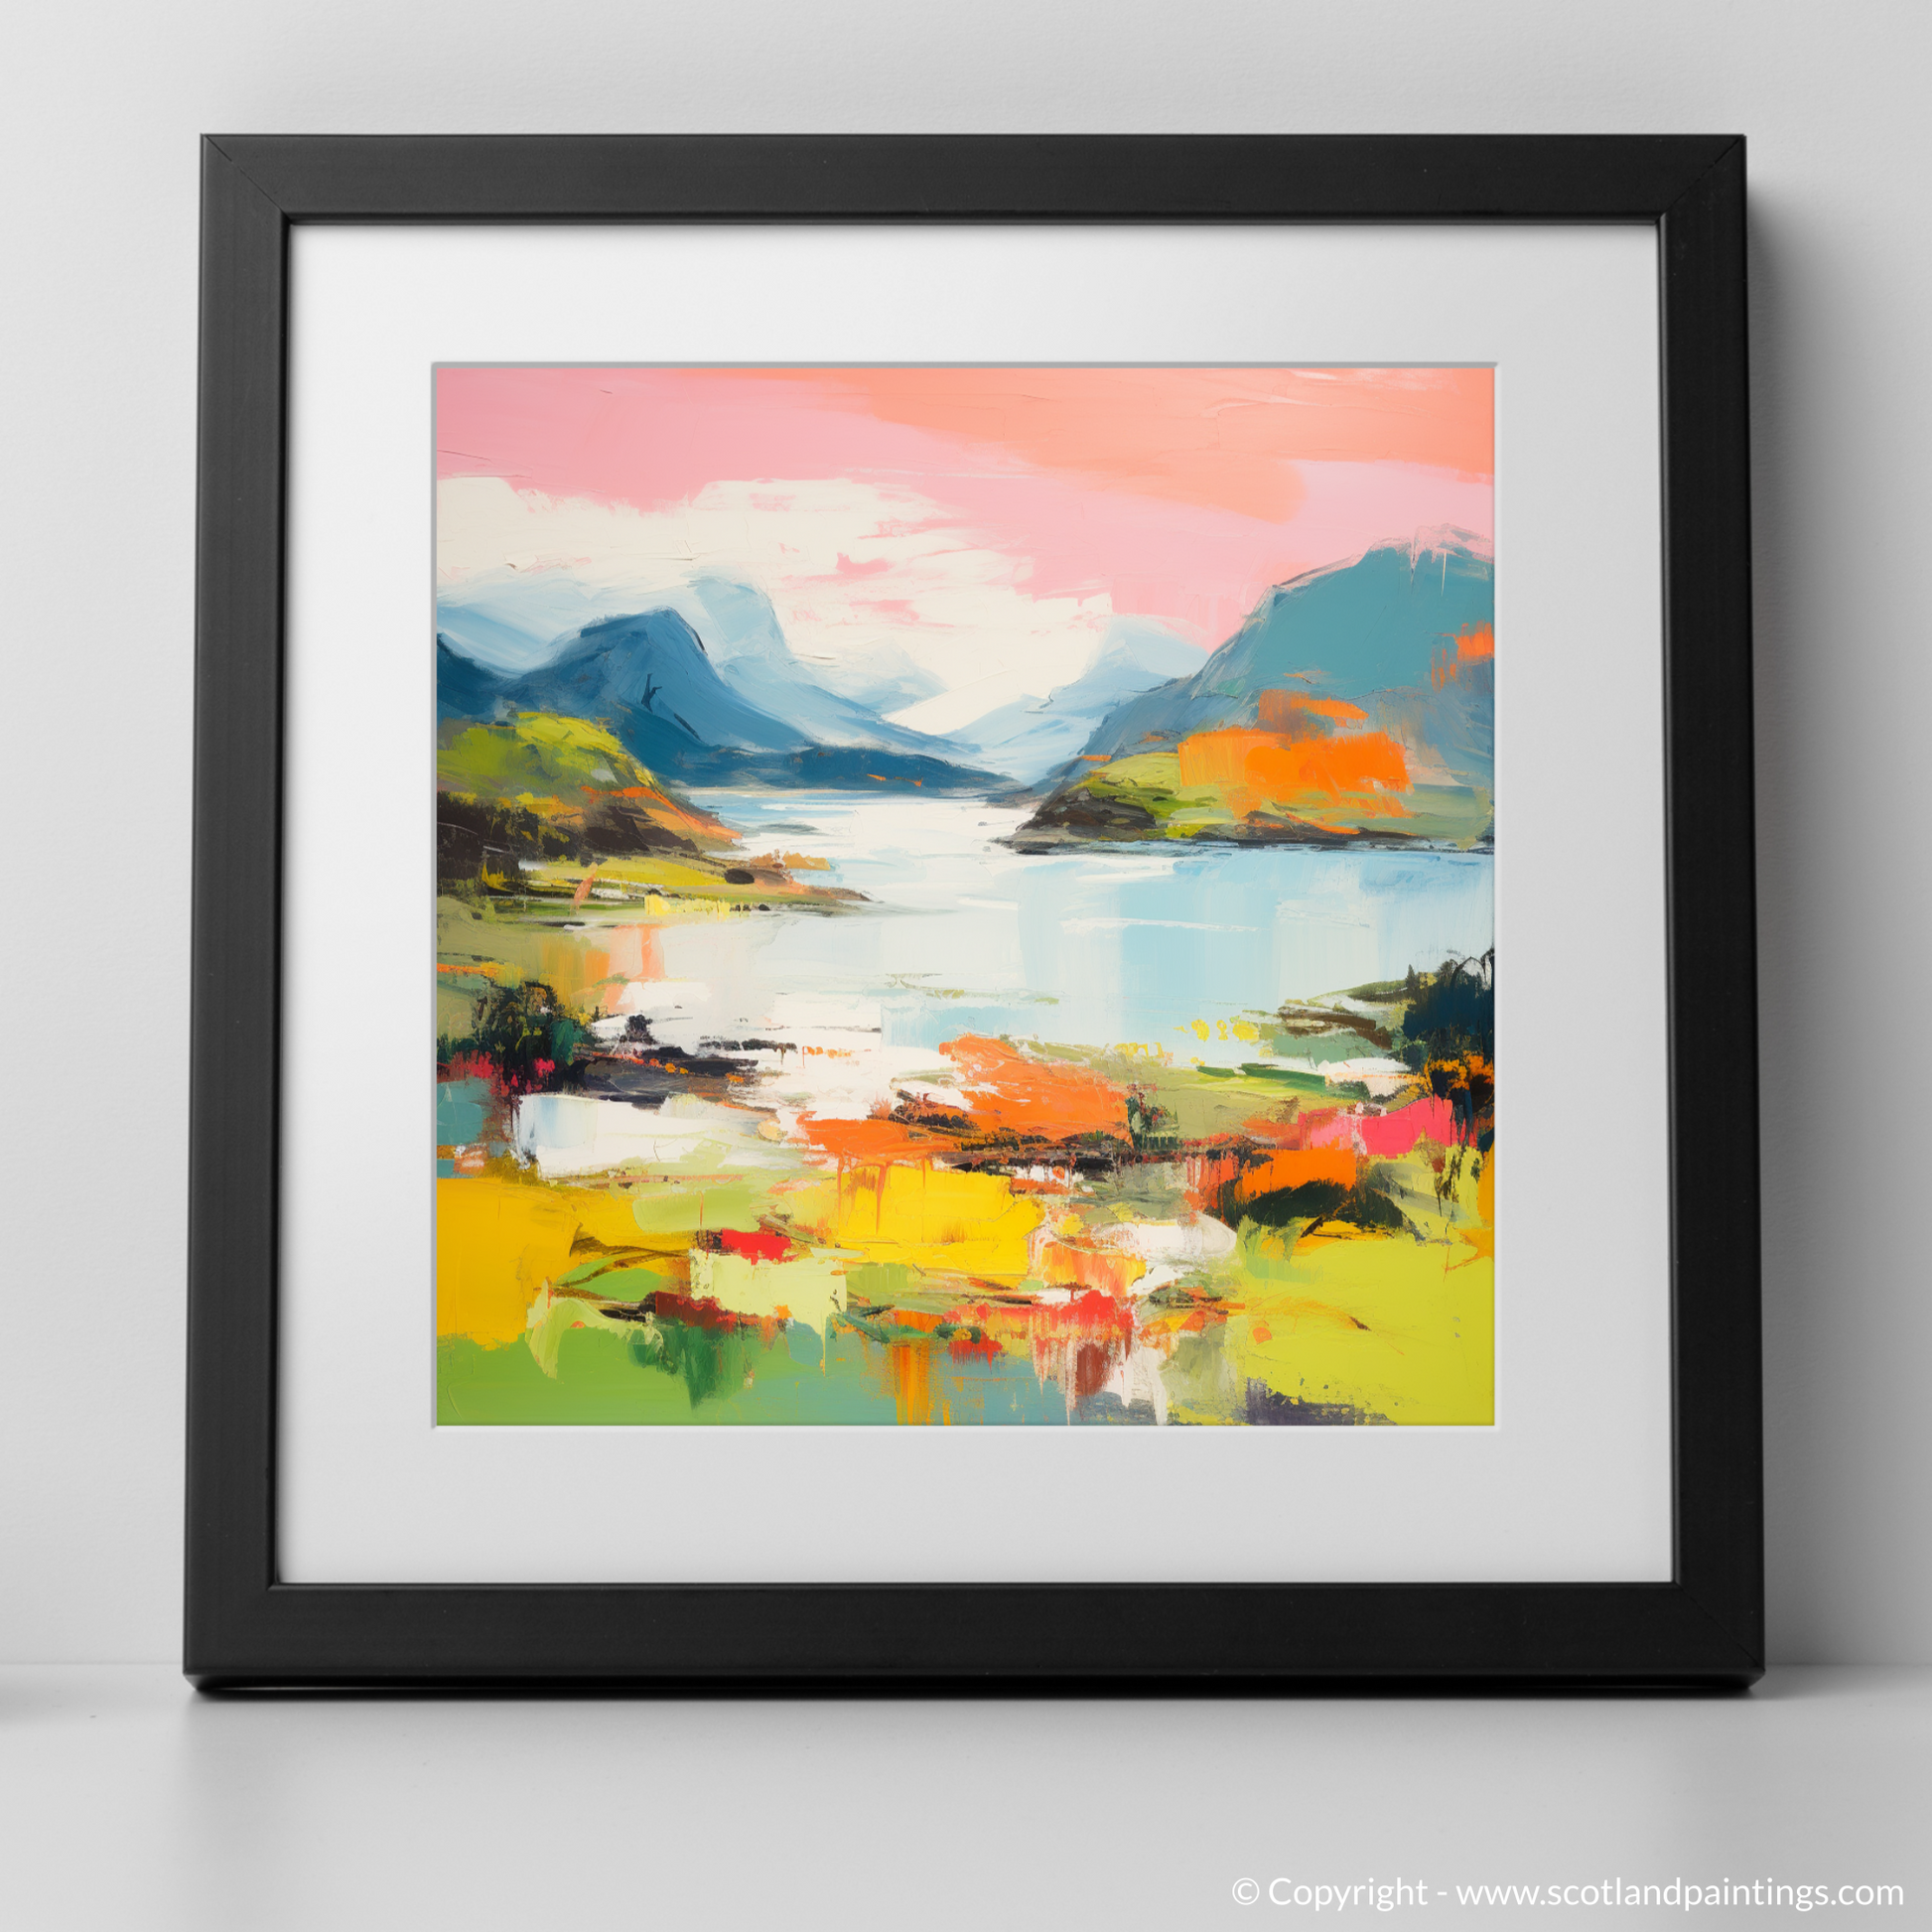 Art Print of Loch Morar, Highlands in summer with a black frame